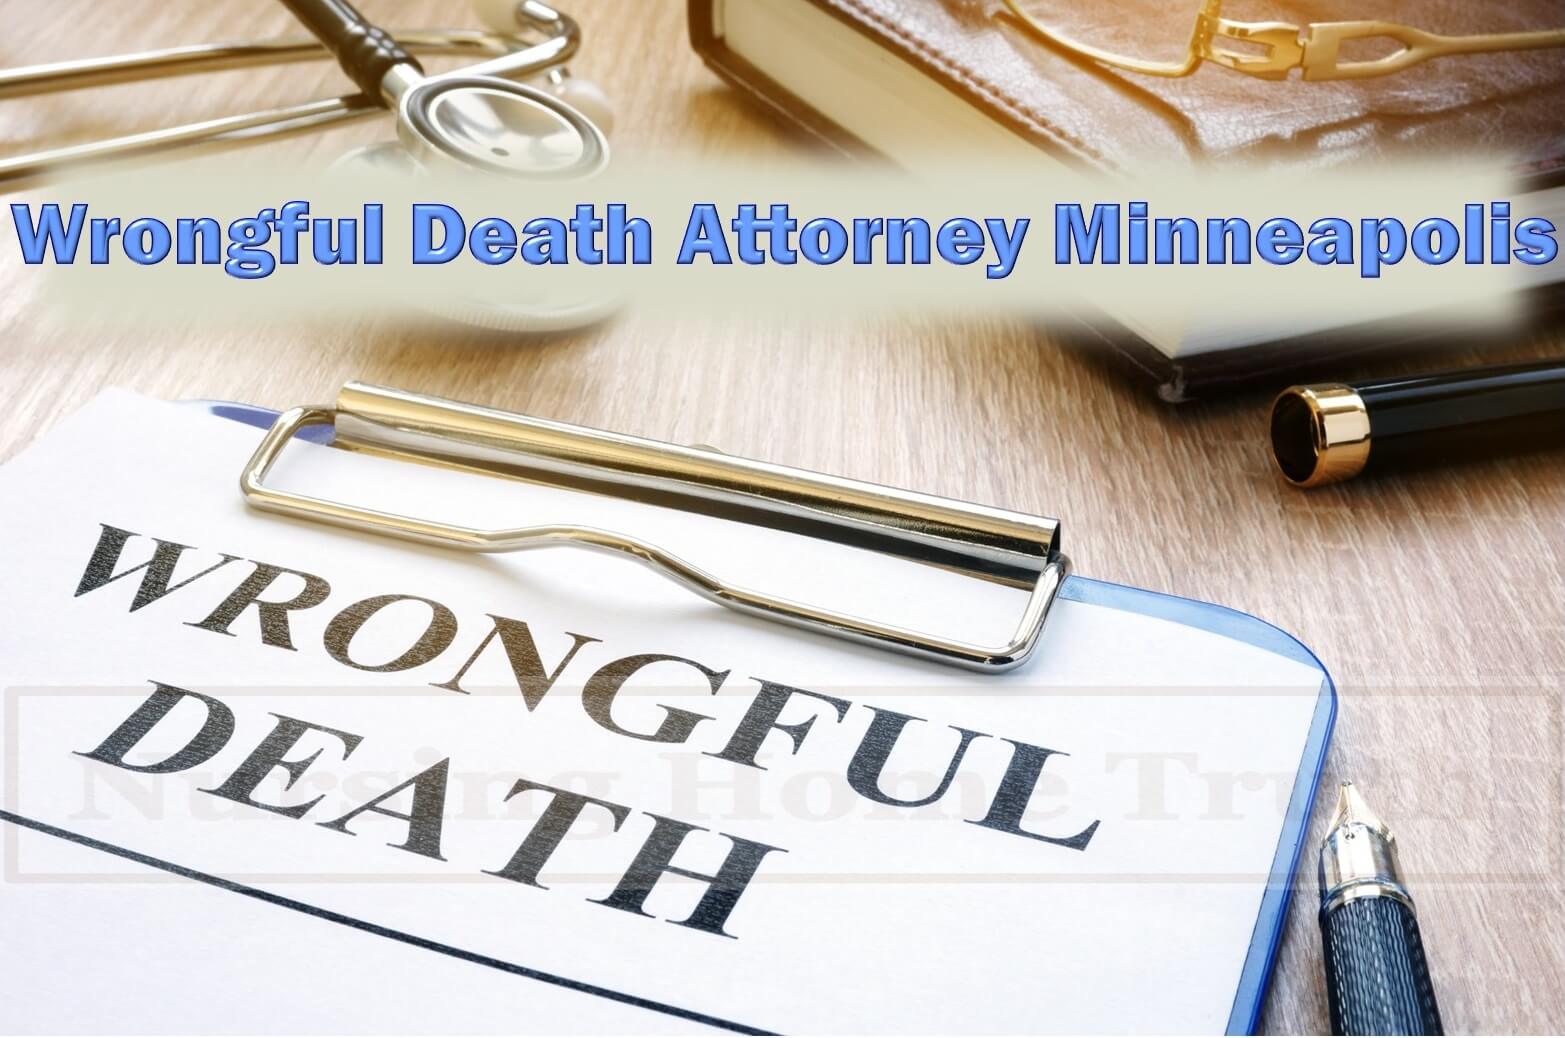 Minneapolis Wrongful Death Attorney Benefits